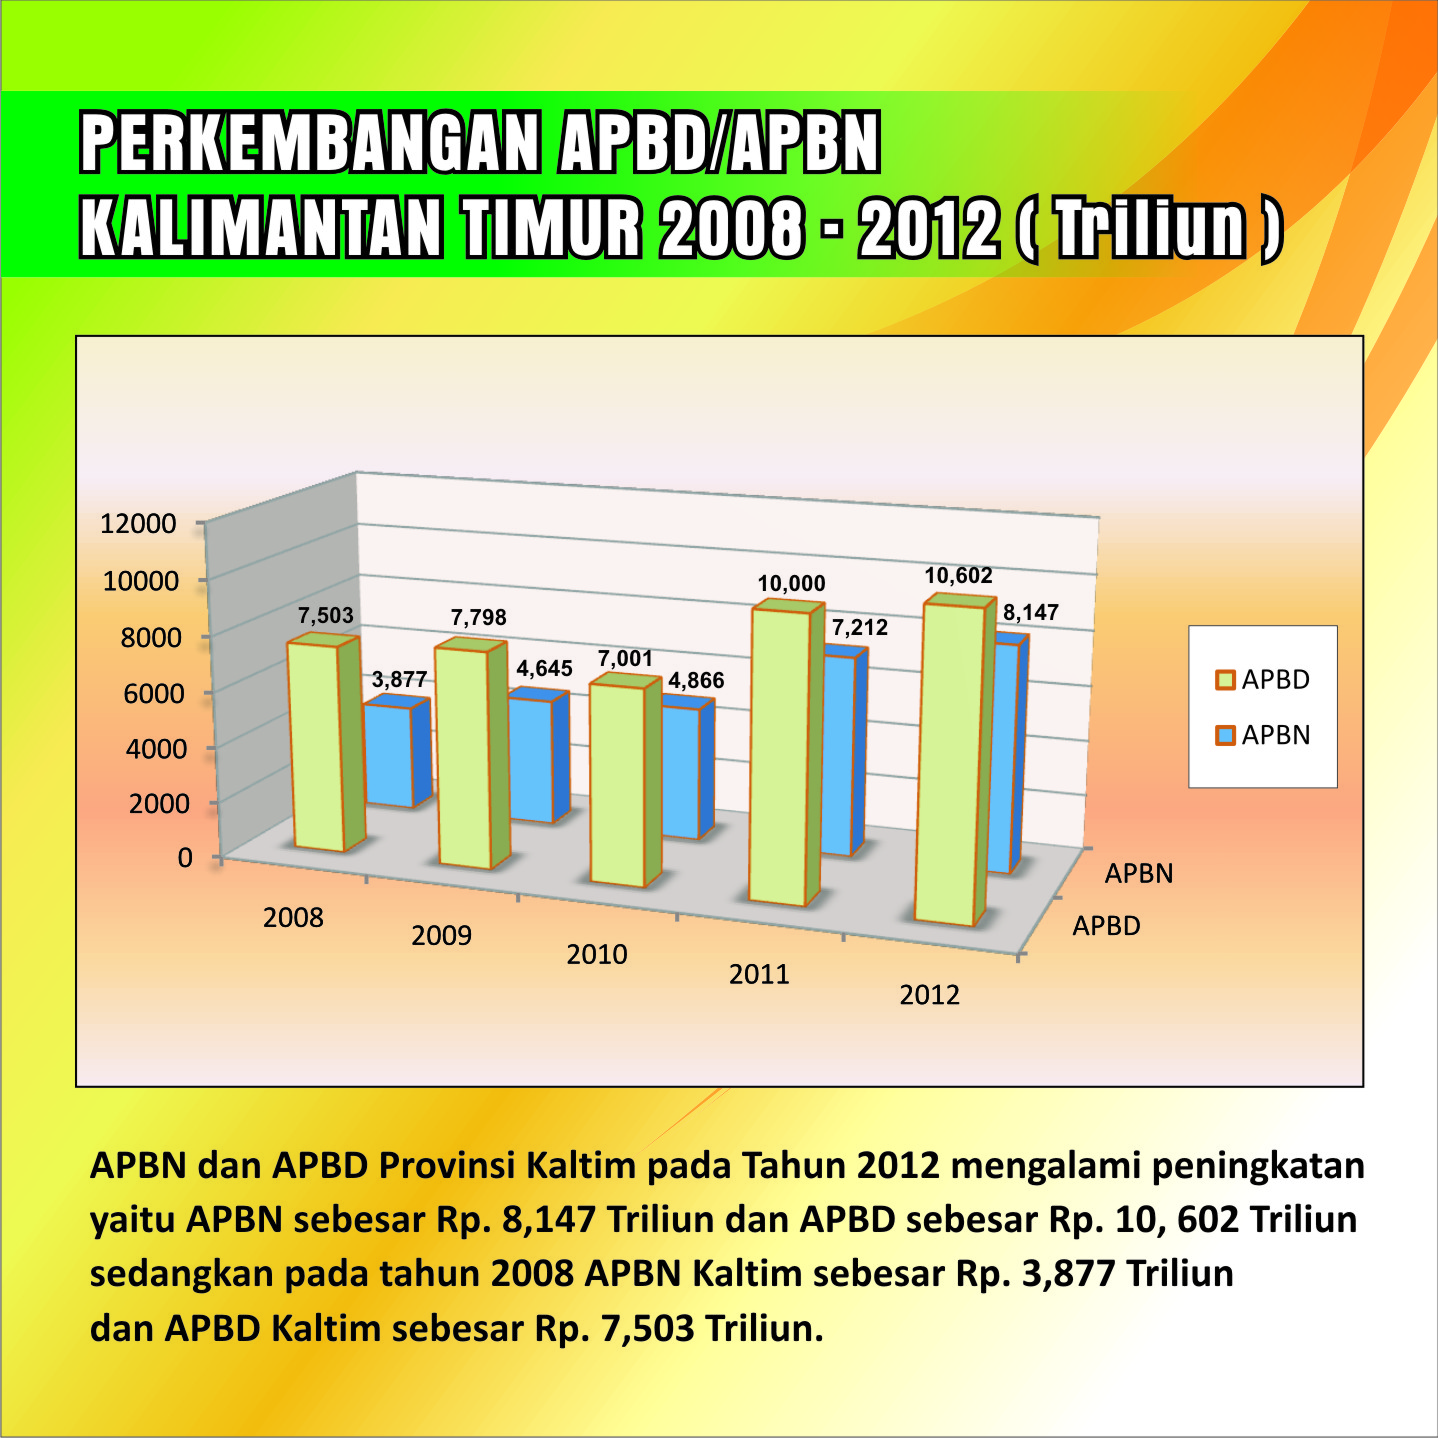 1._Perkembangan__APBD_dan_APBN_th_2008-2012_Trilliun